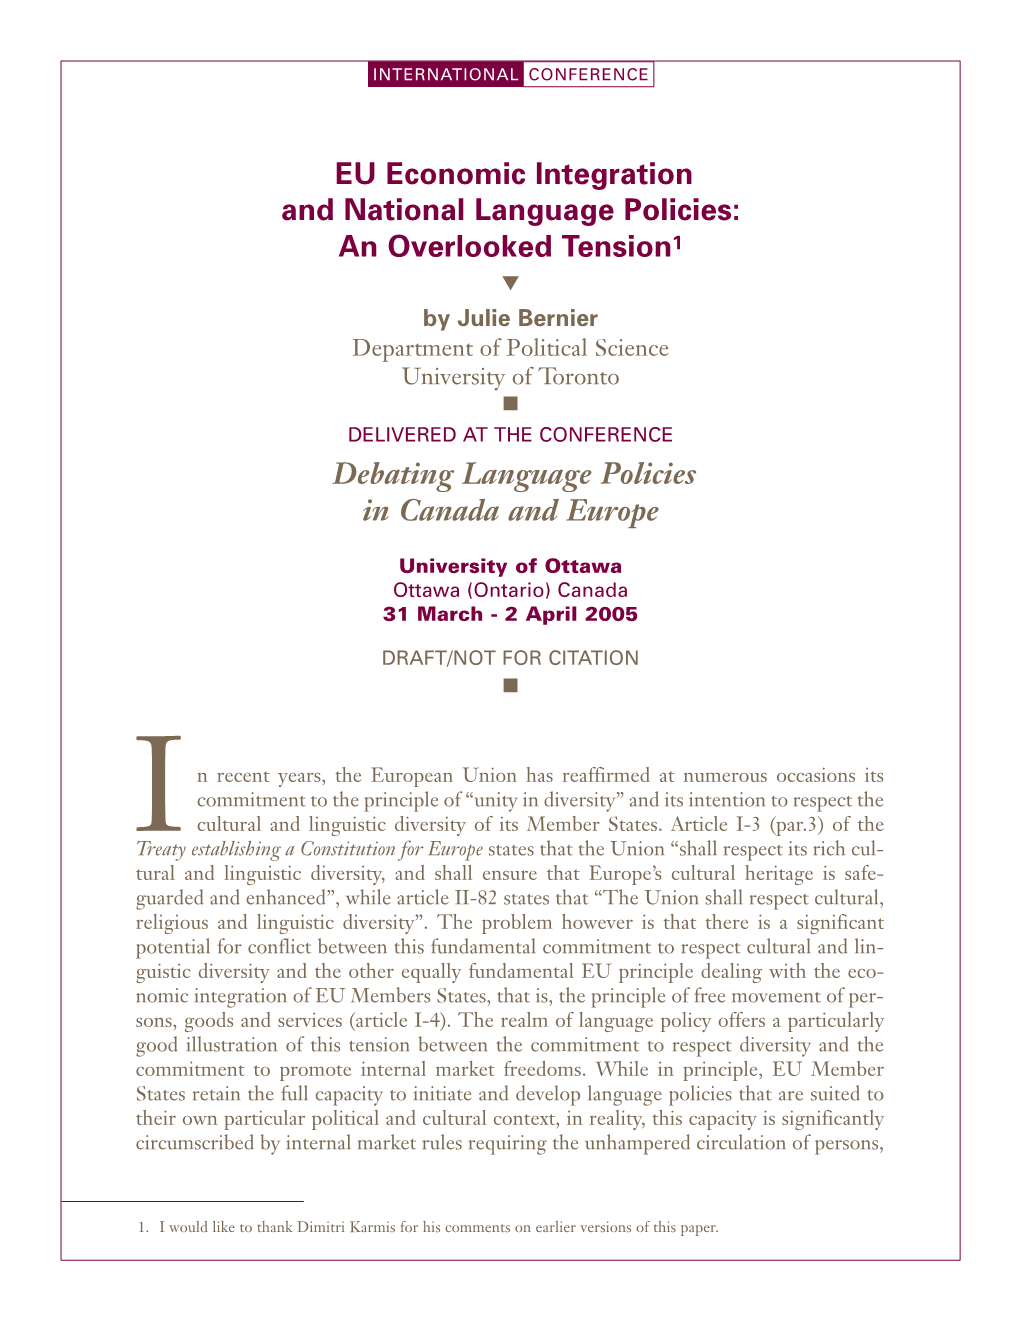 EU Economic Integration and National Language Policies